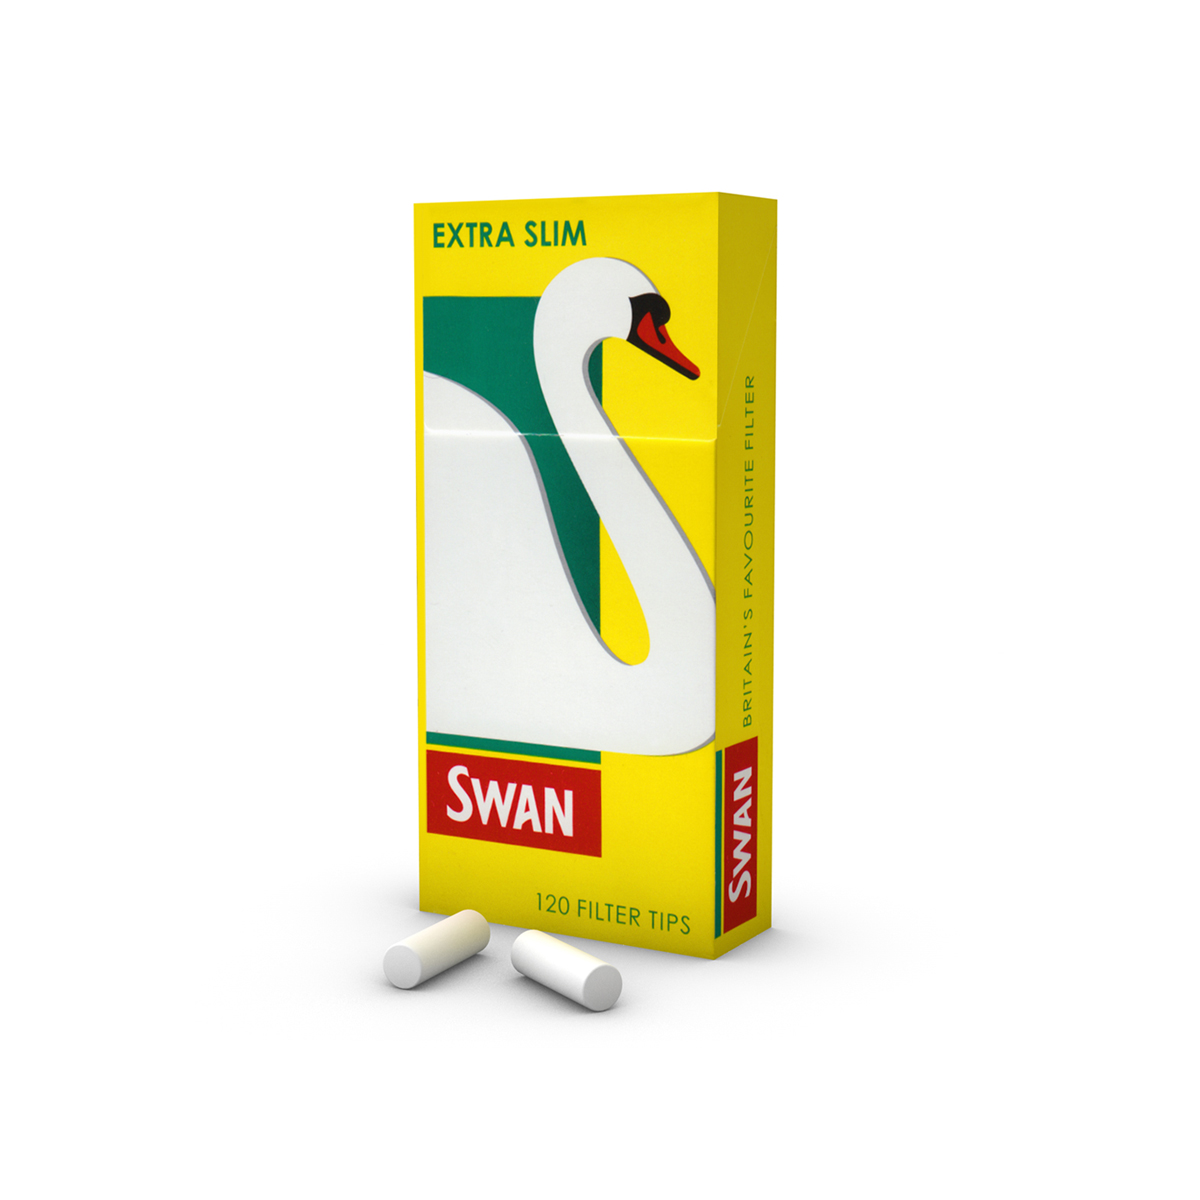 Box of 120 Swan cigarette filters